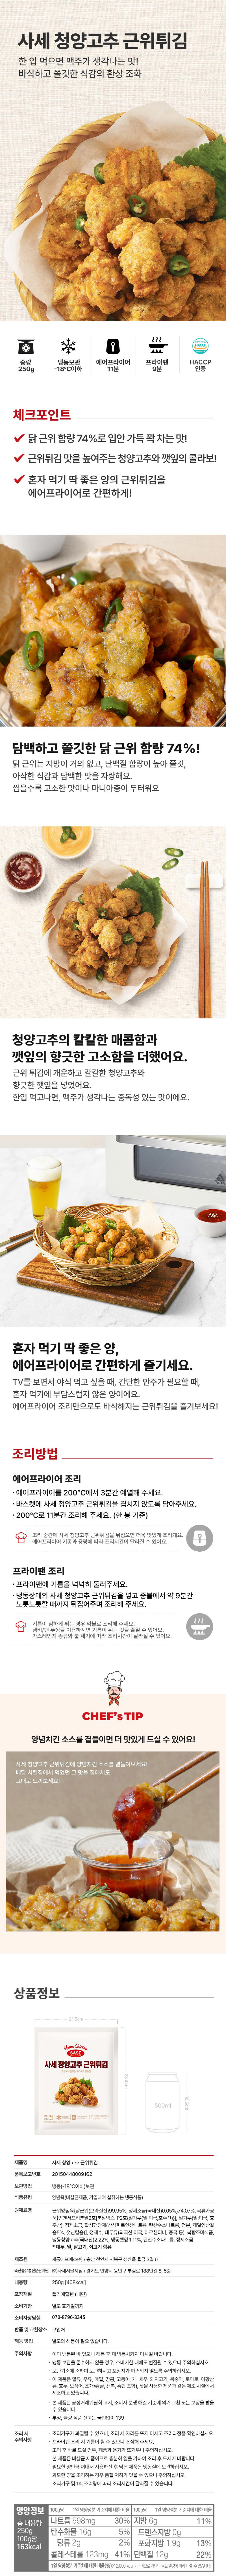 cheongyang-gochu-geunwi-fried-food-250g_detail_800_01.jpg